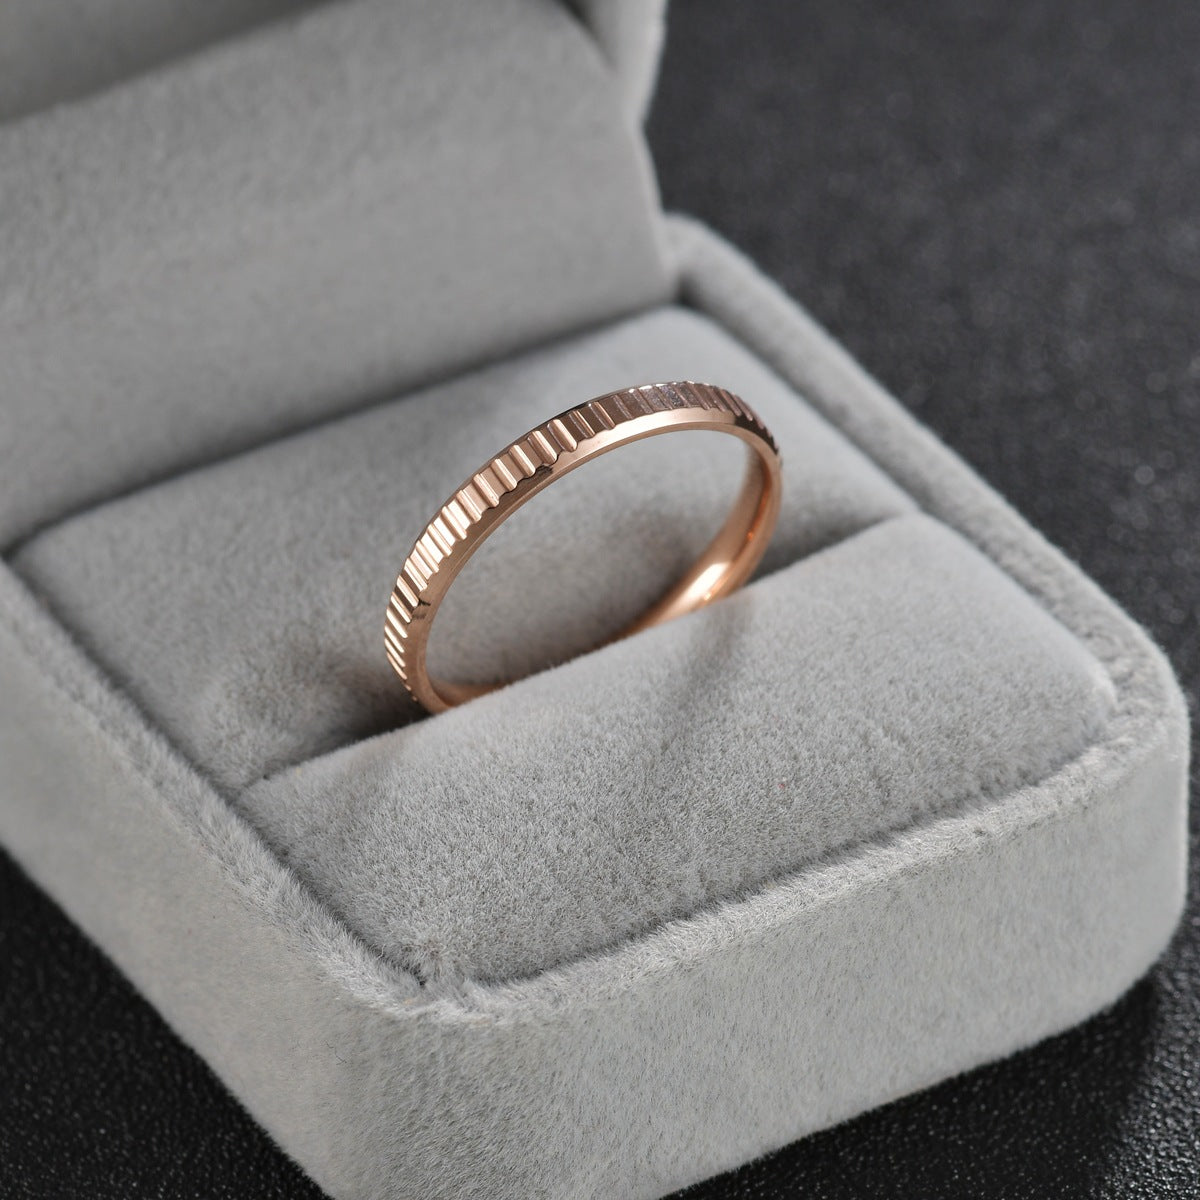 Rose Gold Concave Convex Gear Ring in Titanium Steel - Japanese and Korean Fusion